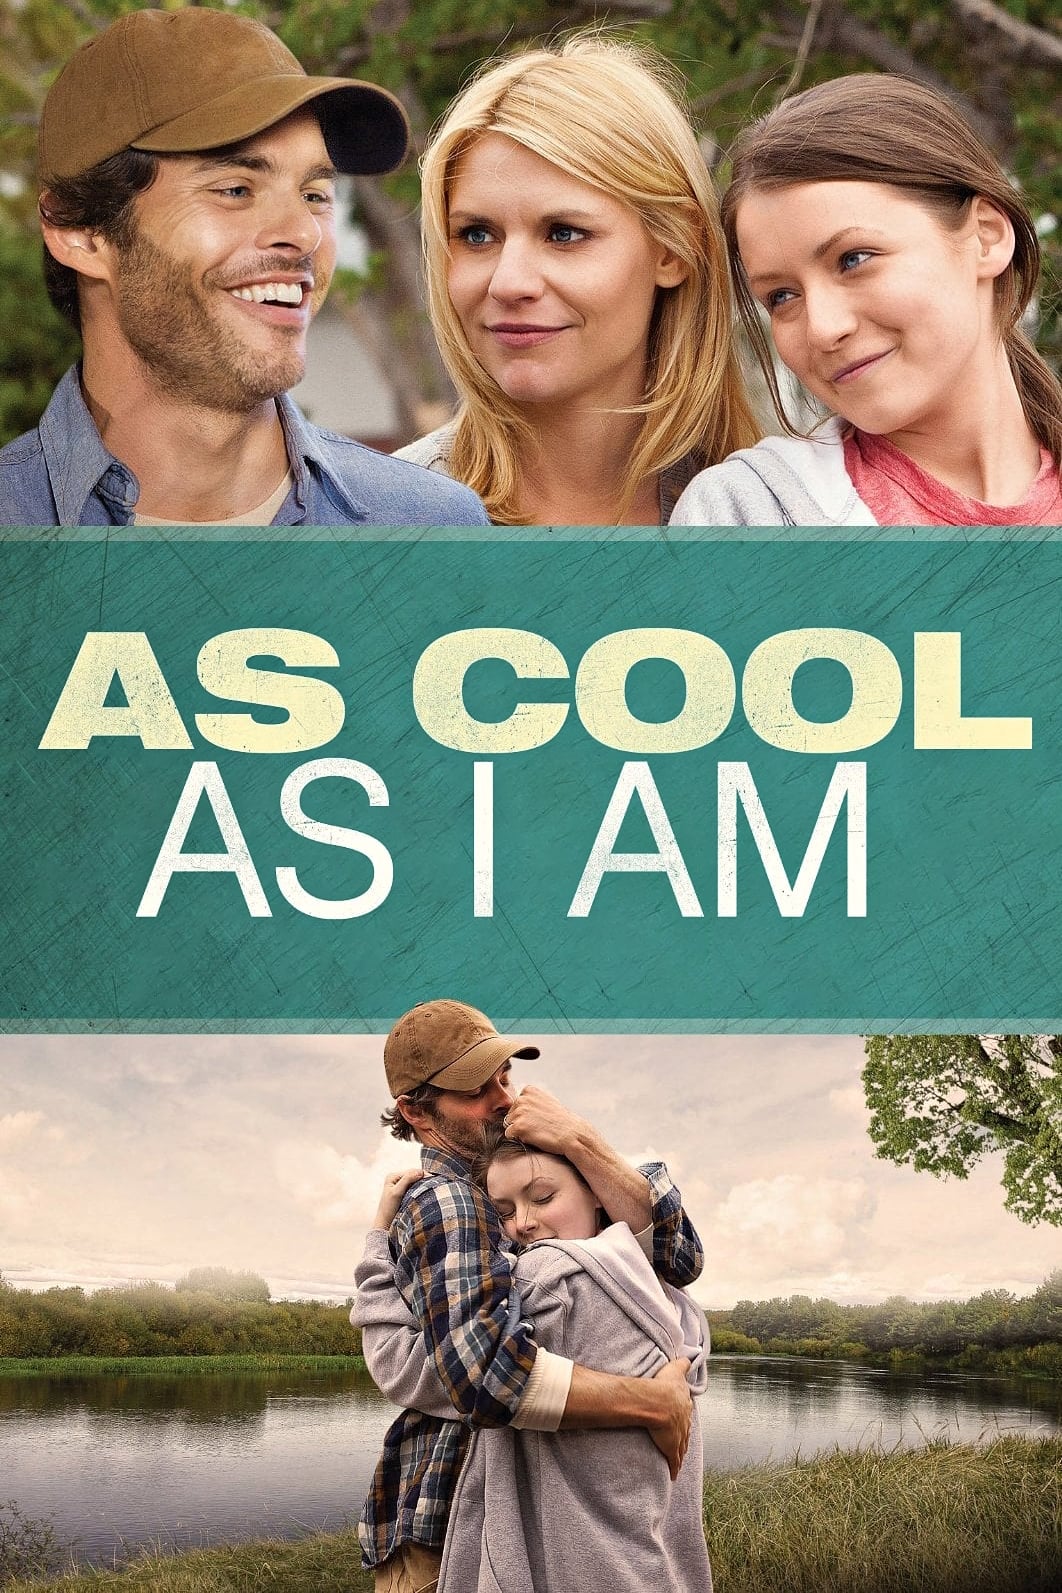 As Cool as i Am [Sub-ITA] (2013)